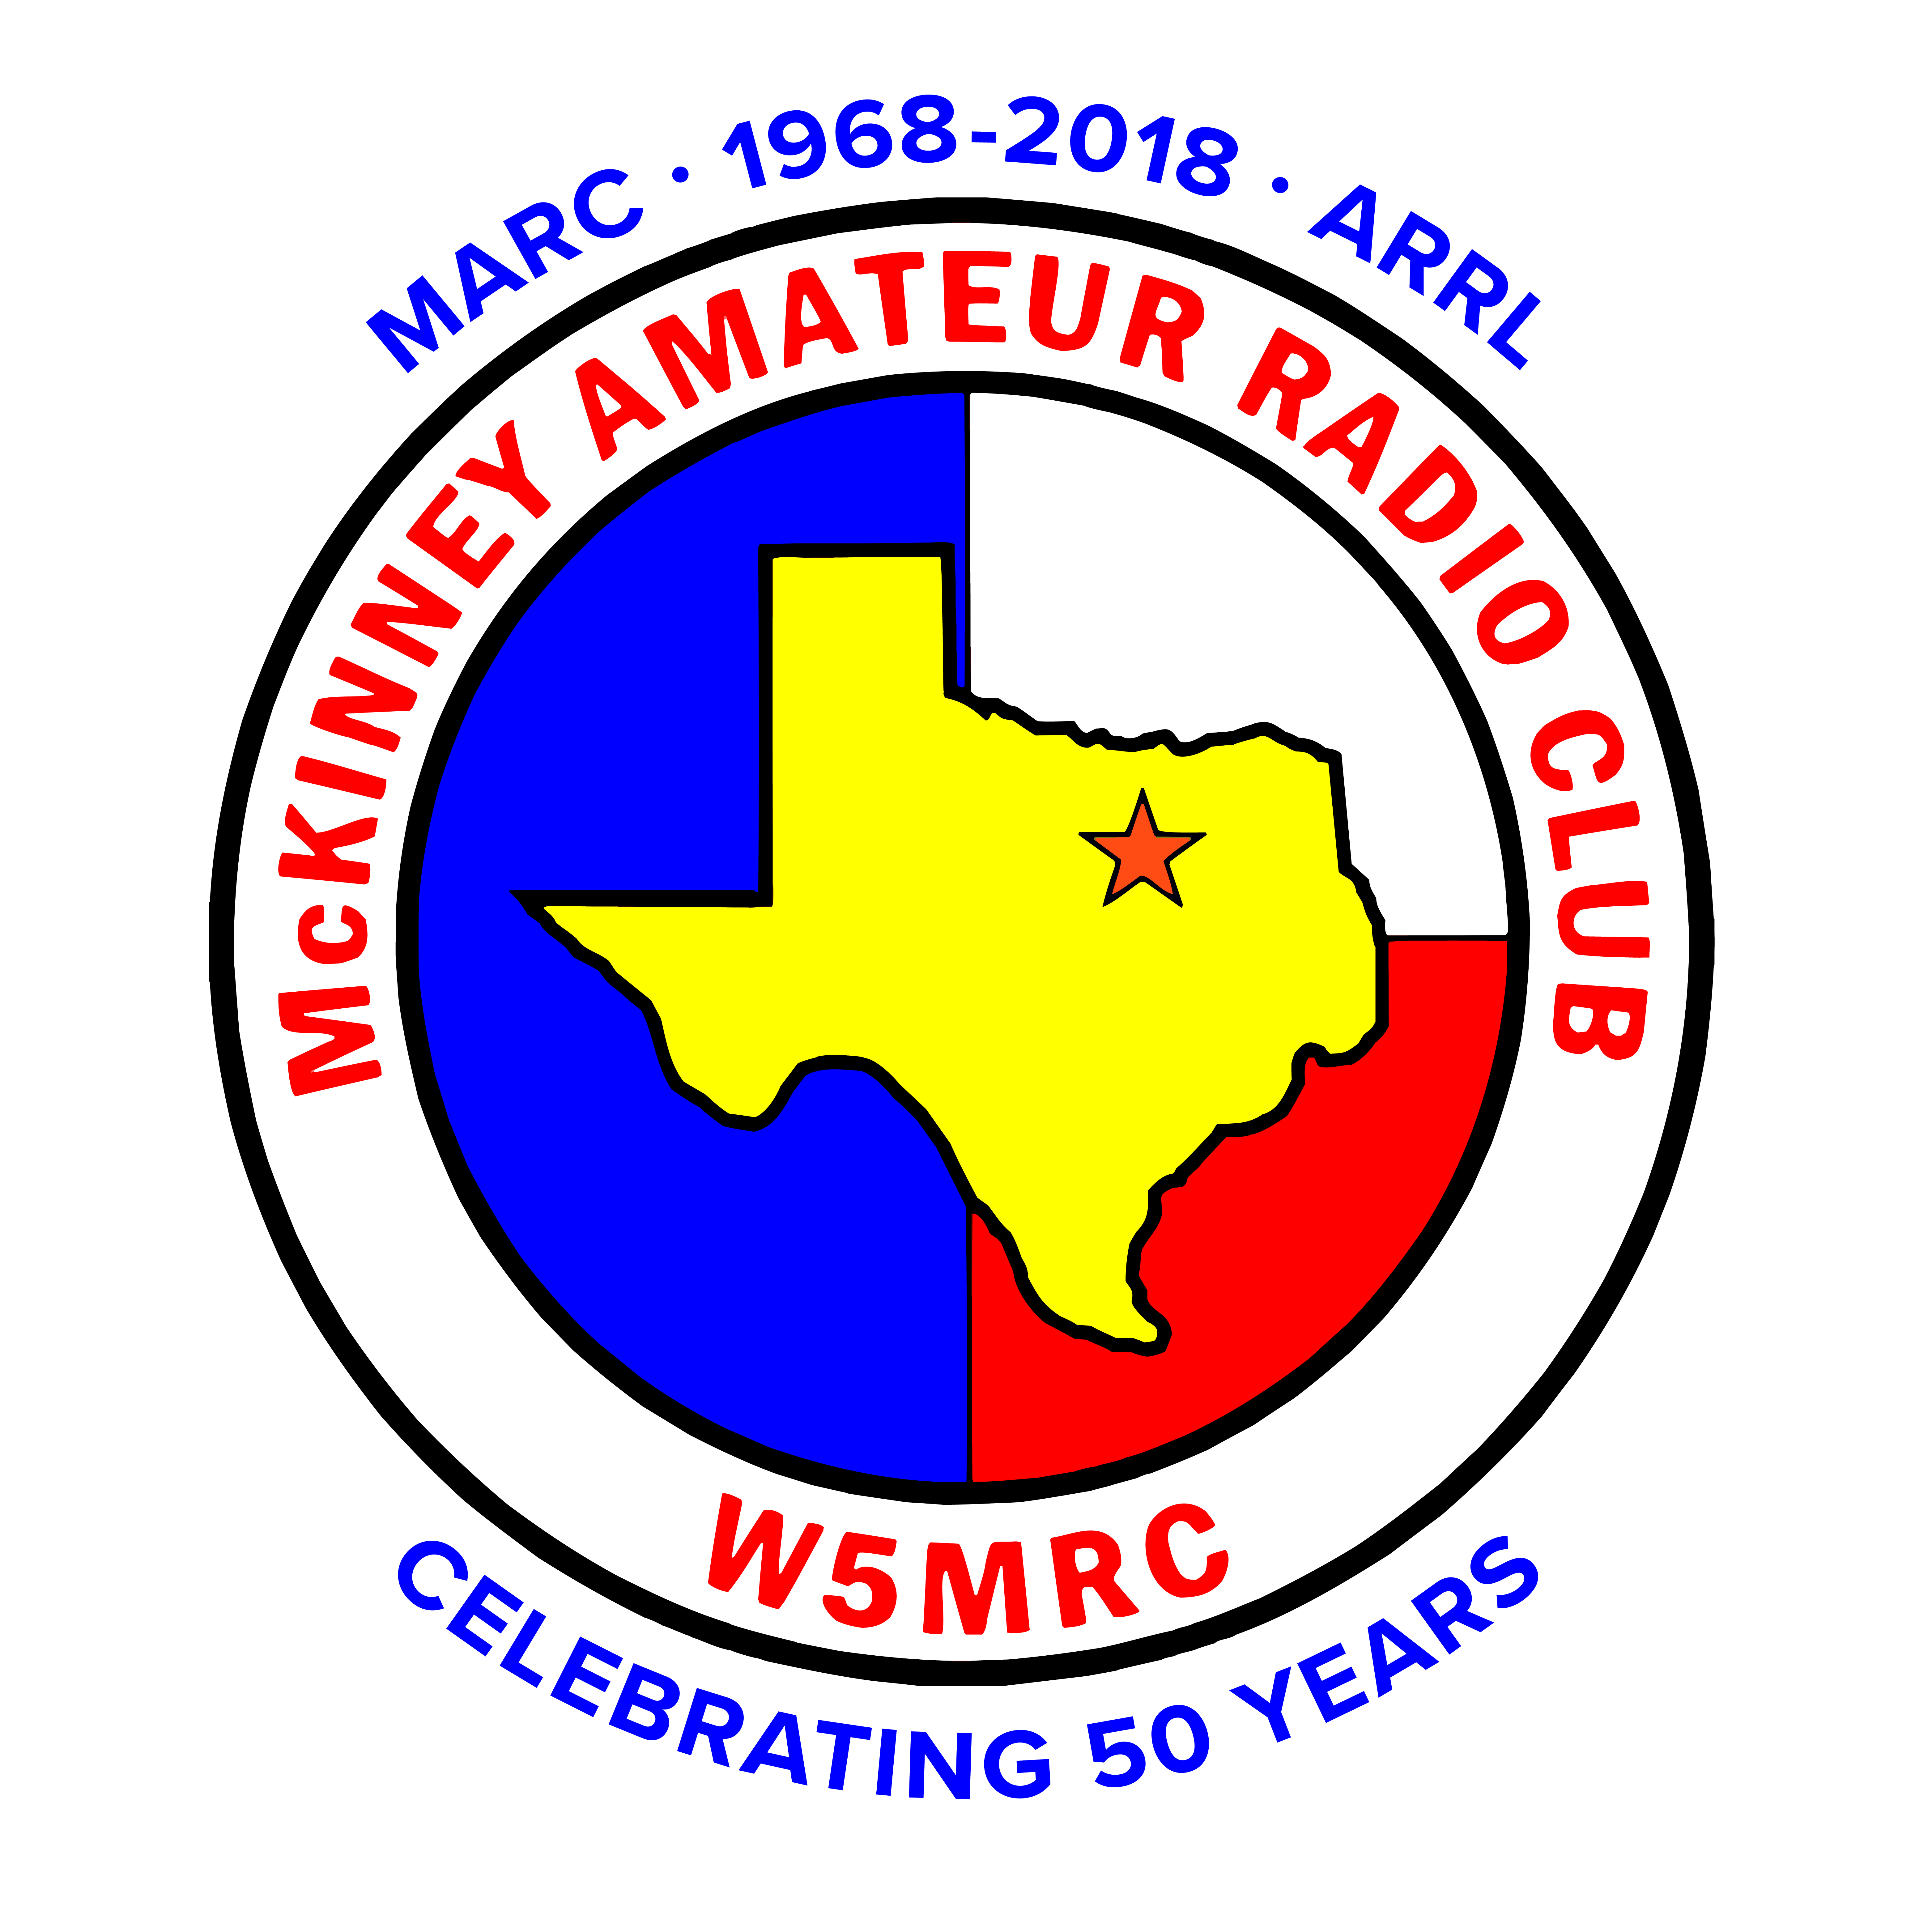 50th Anniversary W5MRC logo